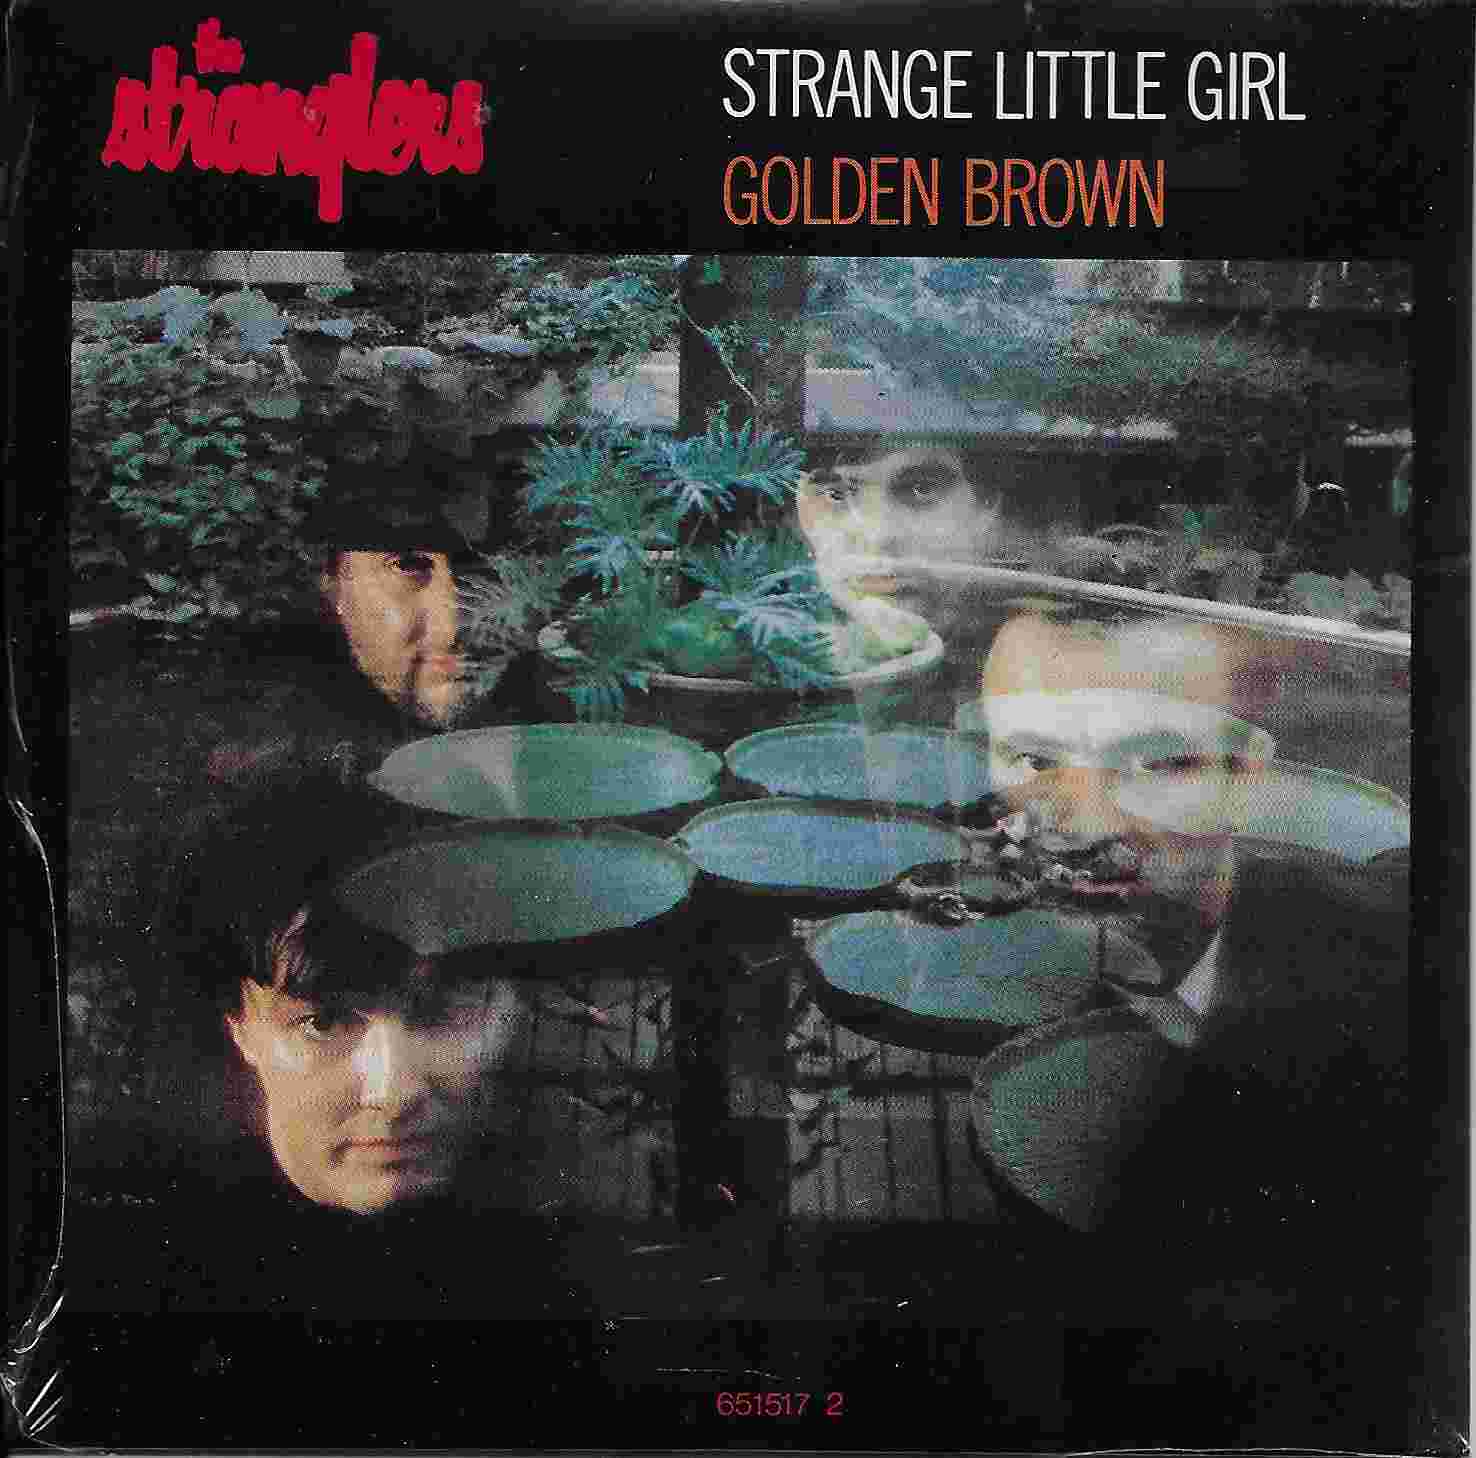 Picture of 651517 2 Strange little girl - French import by artist The Stranglers  from The Stranglers cdsingles